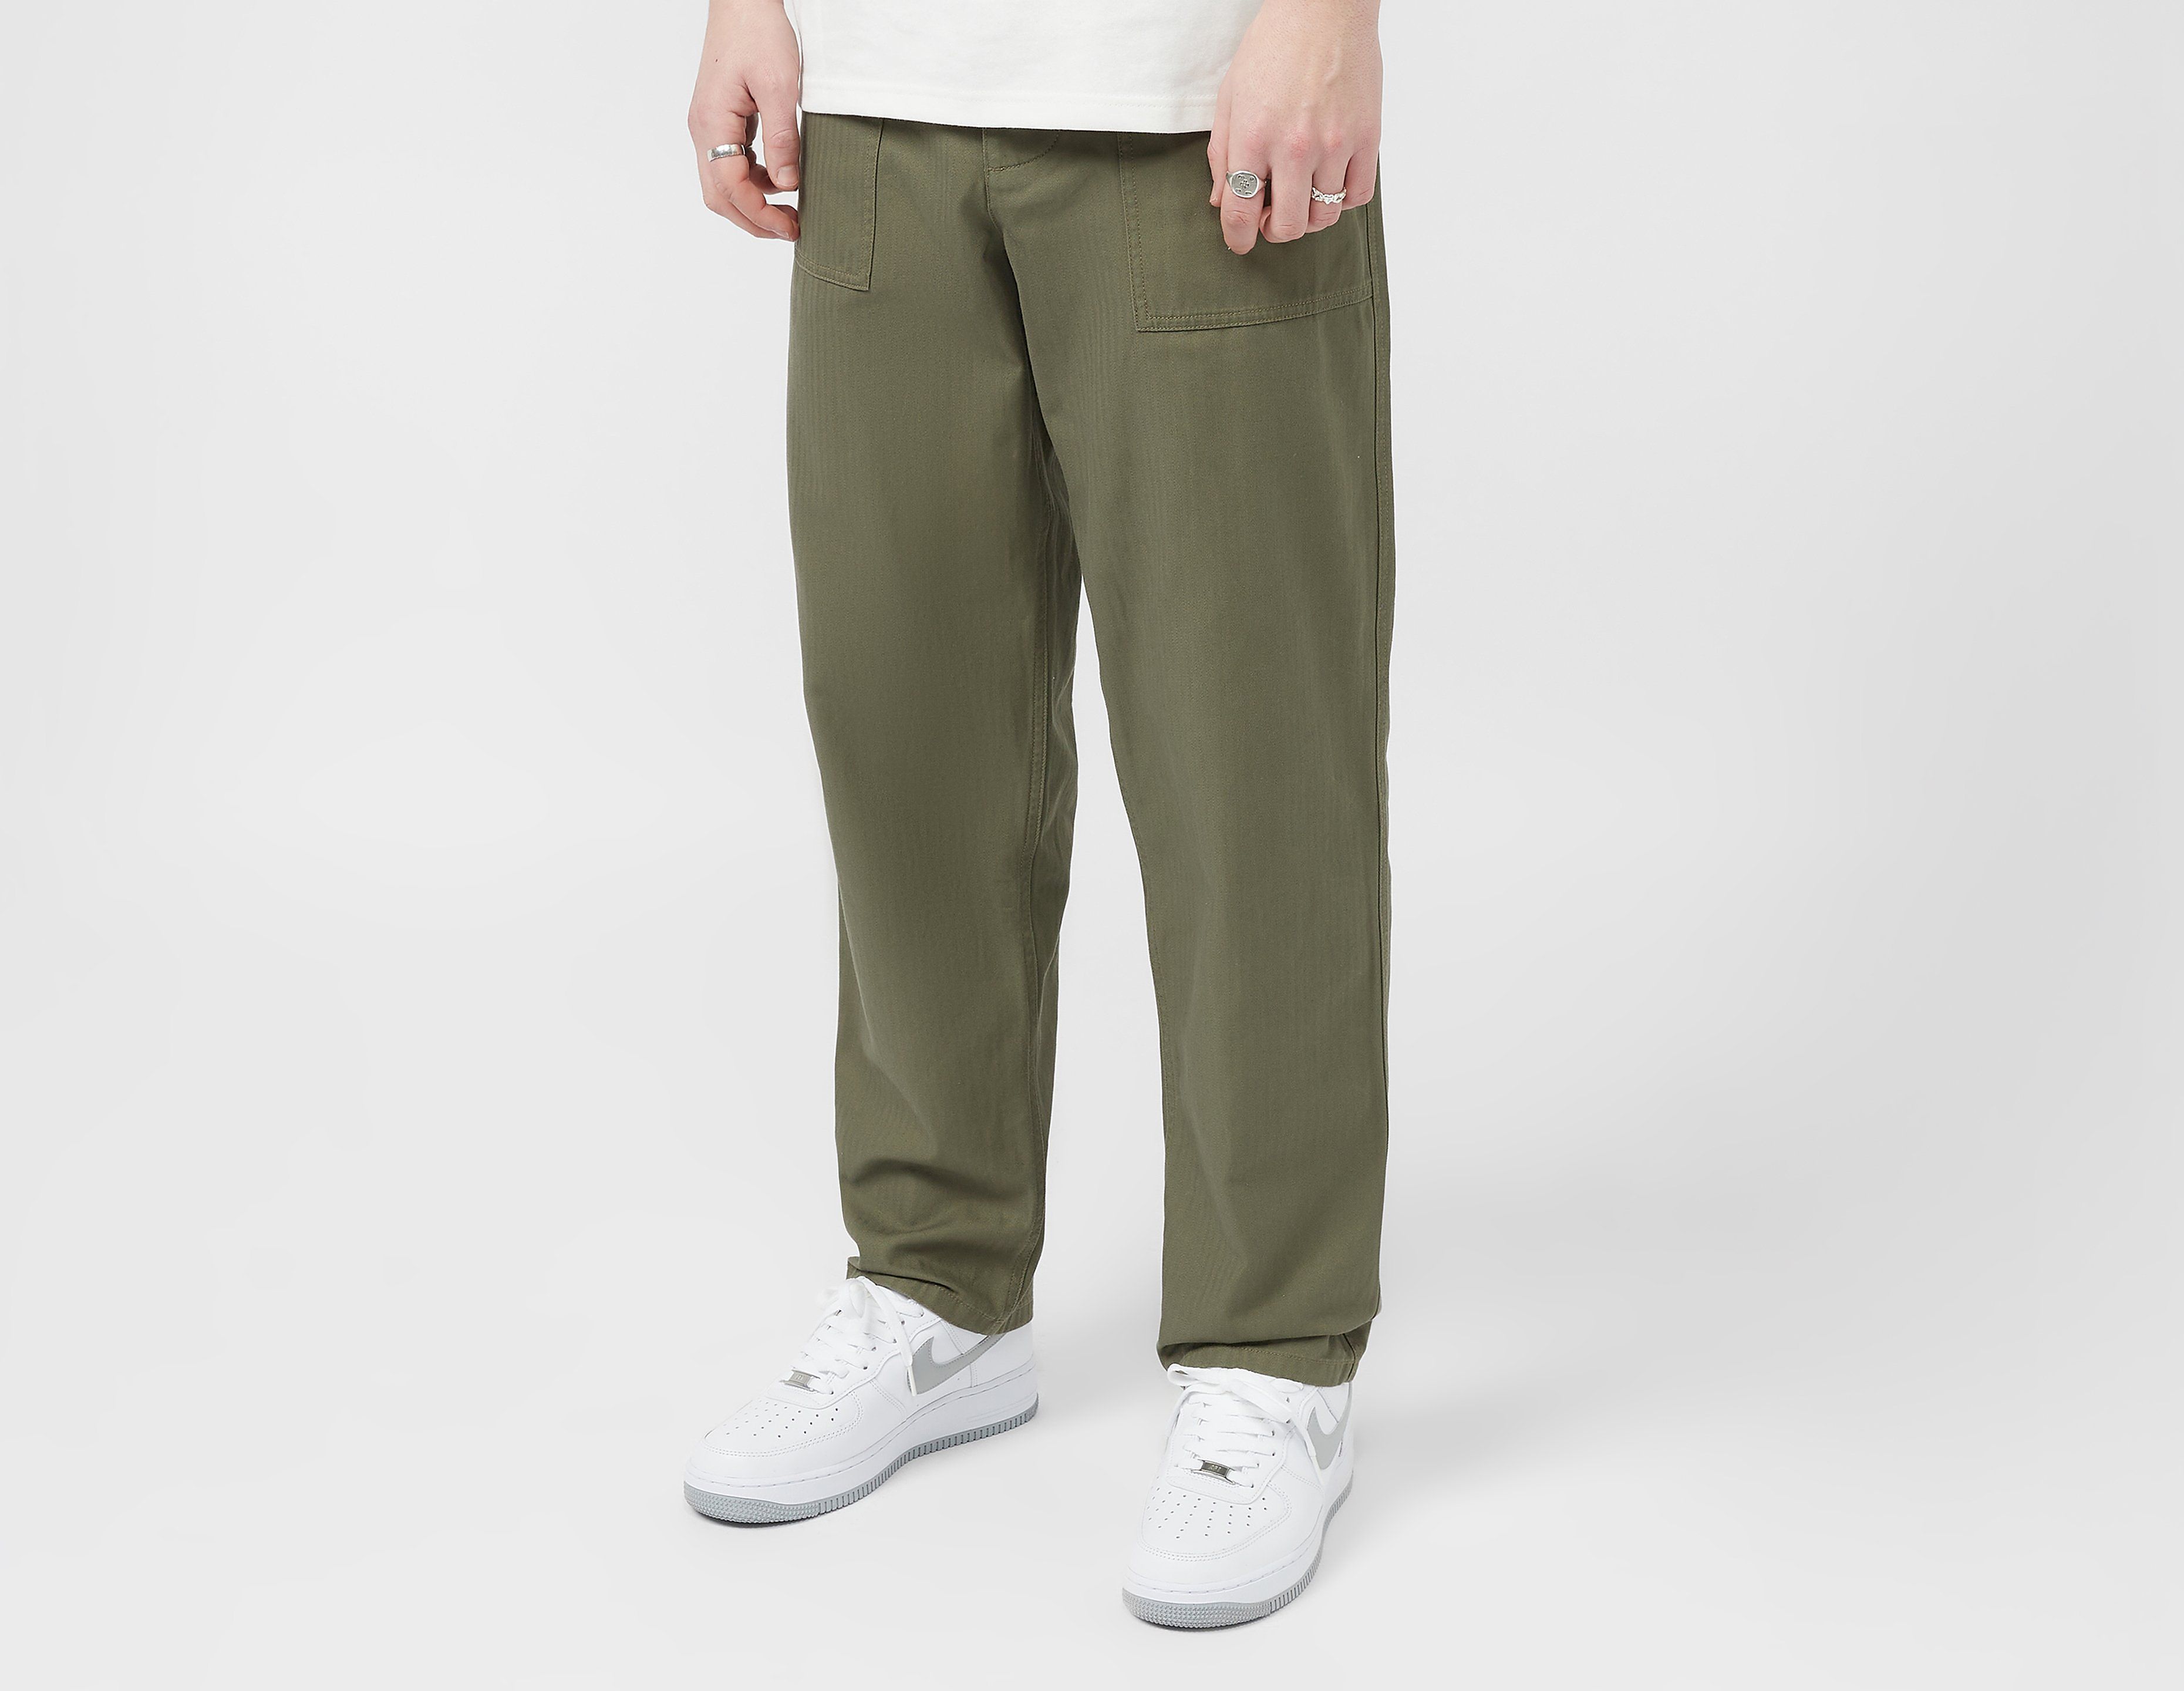 Nike Life Fatigue Pants, Green